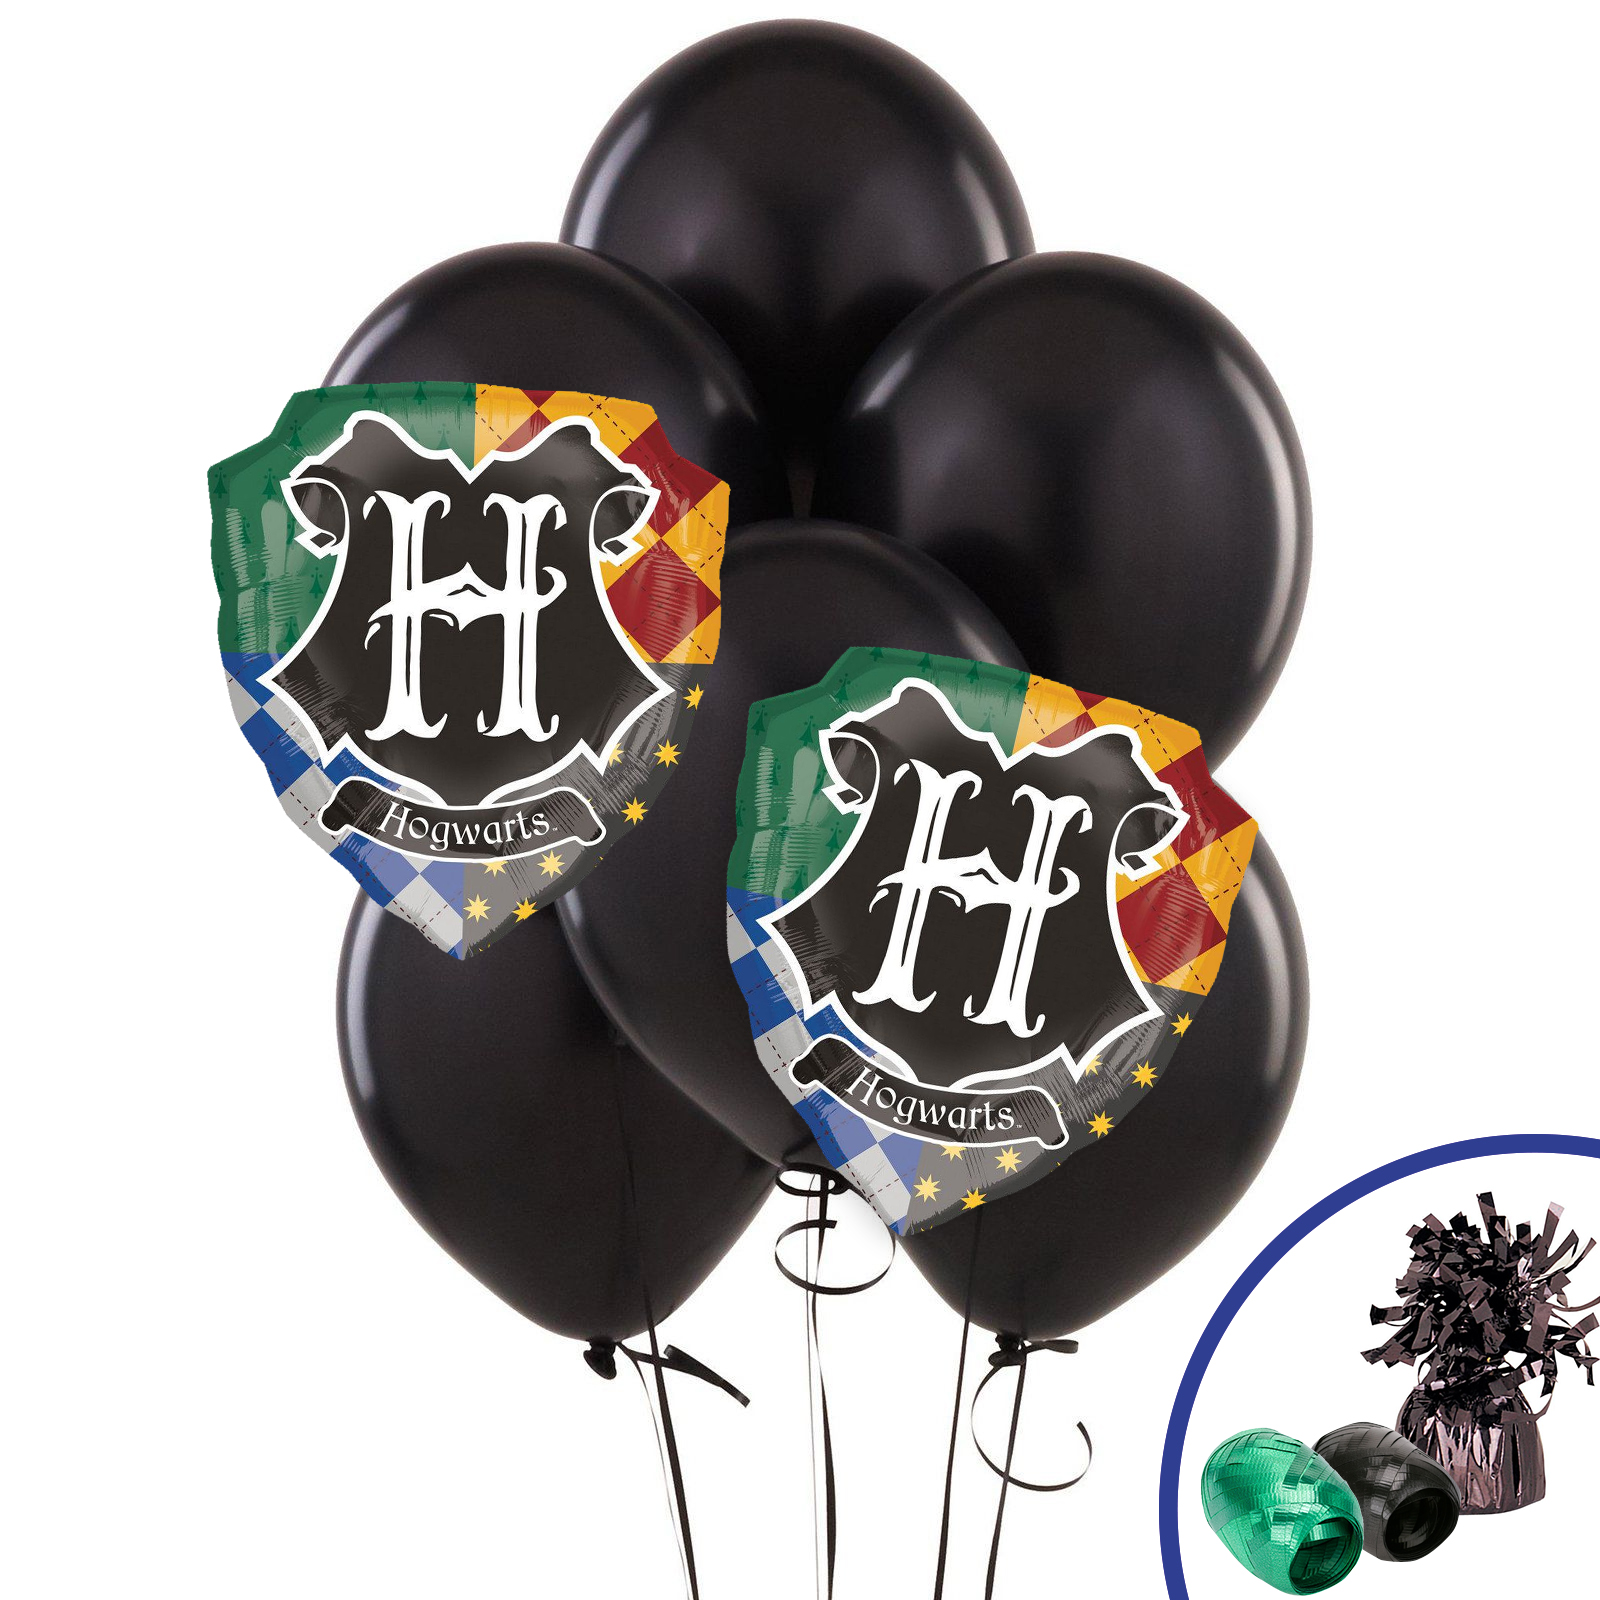 Harry Potter Balloon bouquet